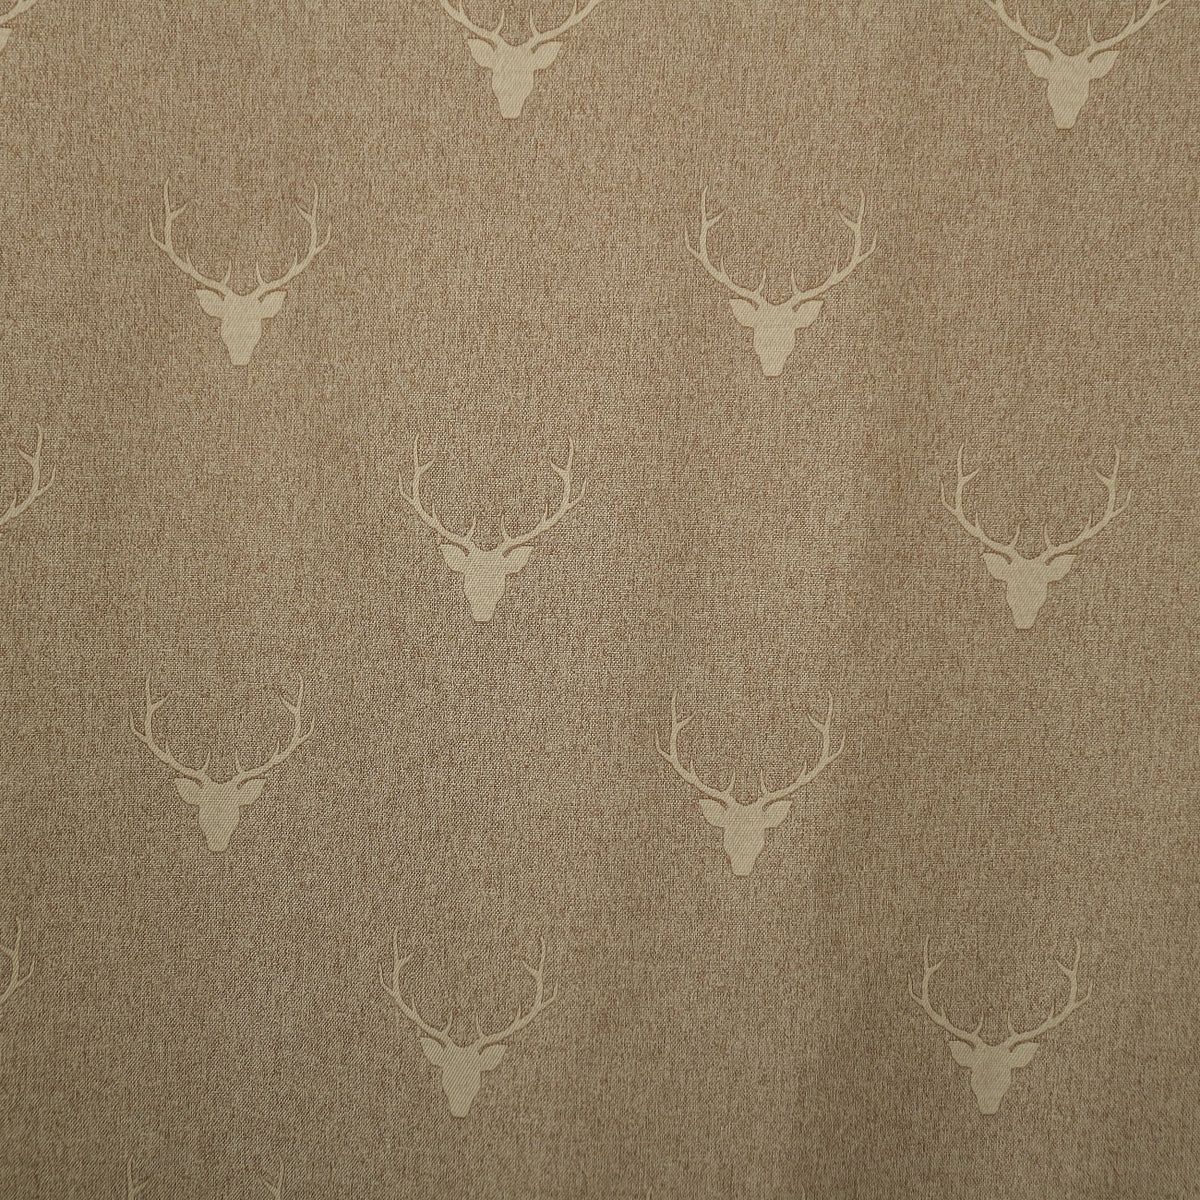 Night curtain beige stag jump